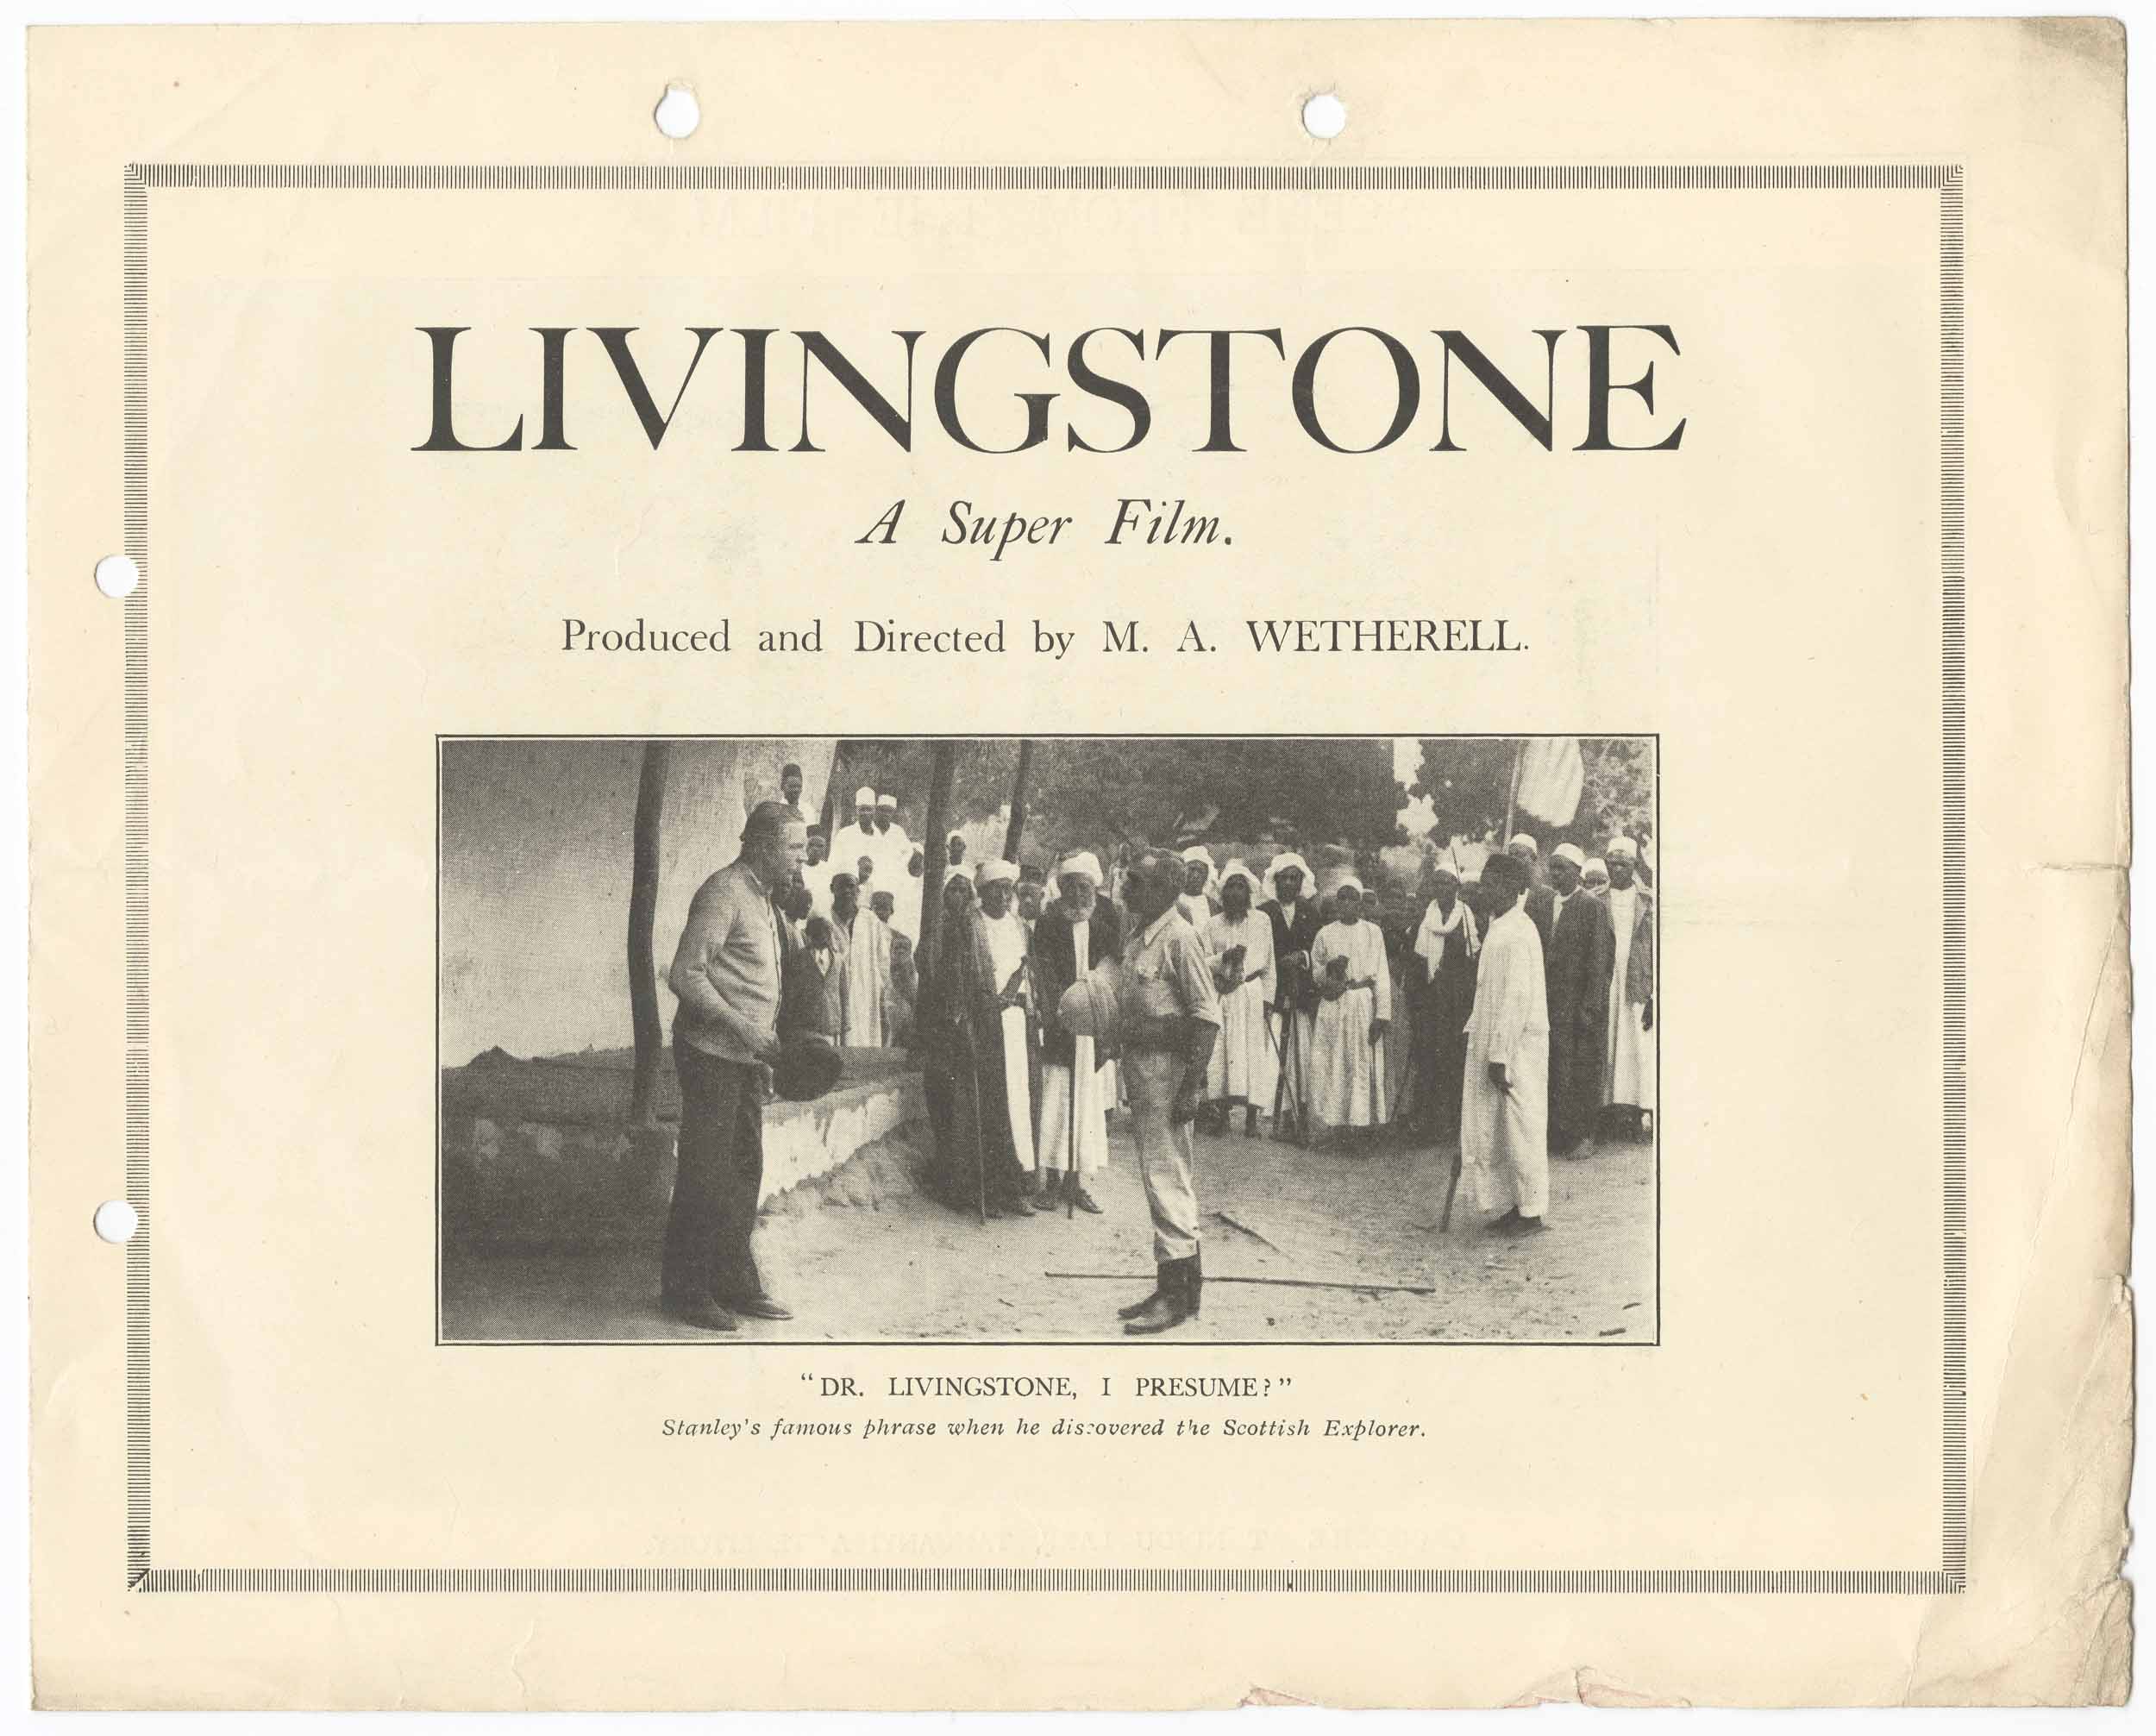 Promotional Leaflet for Livingstone: A Super Film (Film), 1925, by Hero Films Ltd. Copyright National Library of Scotland. Creative Commons Share-alike 2.5 UK: Scotland (https://creativecommons.org/licenses/by-nc-sa/2.5/scotland/).